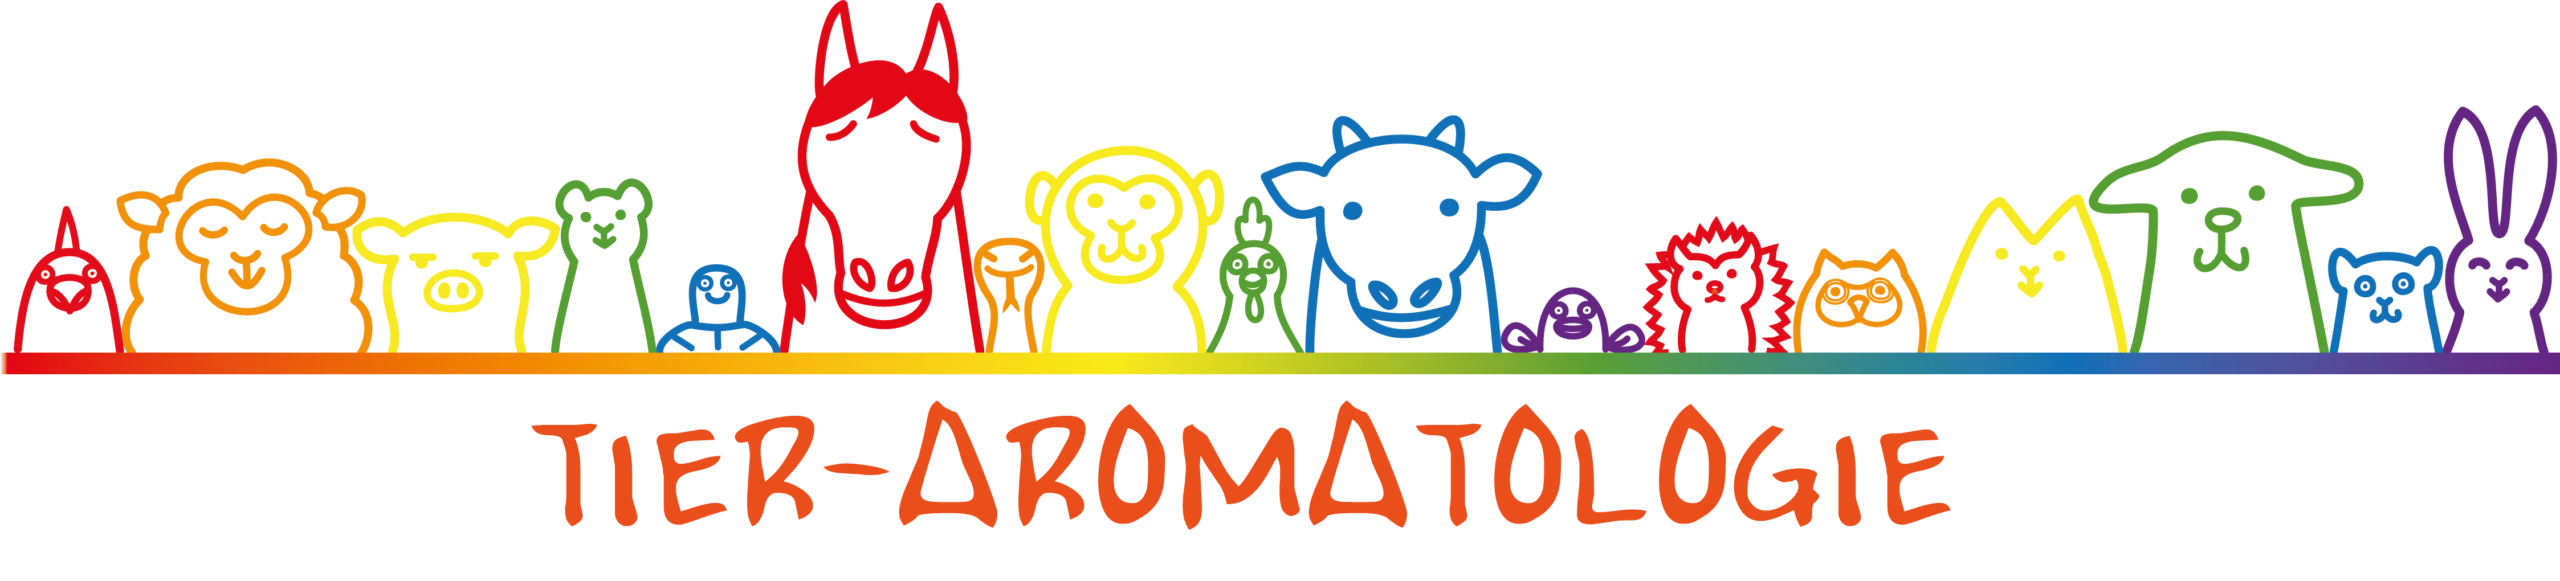 Logo Tier Aromatologie final lang scaled